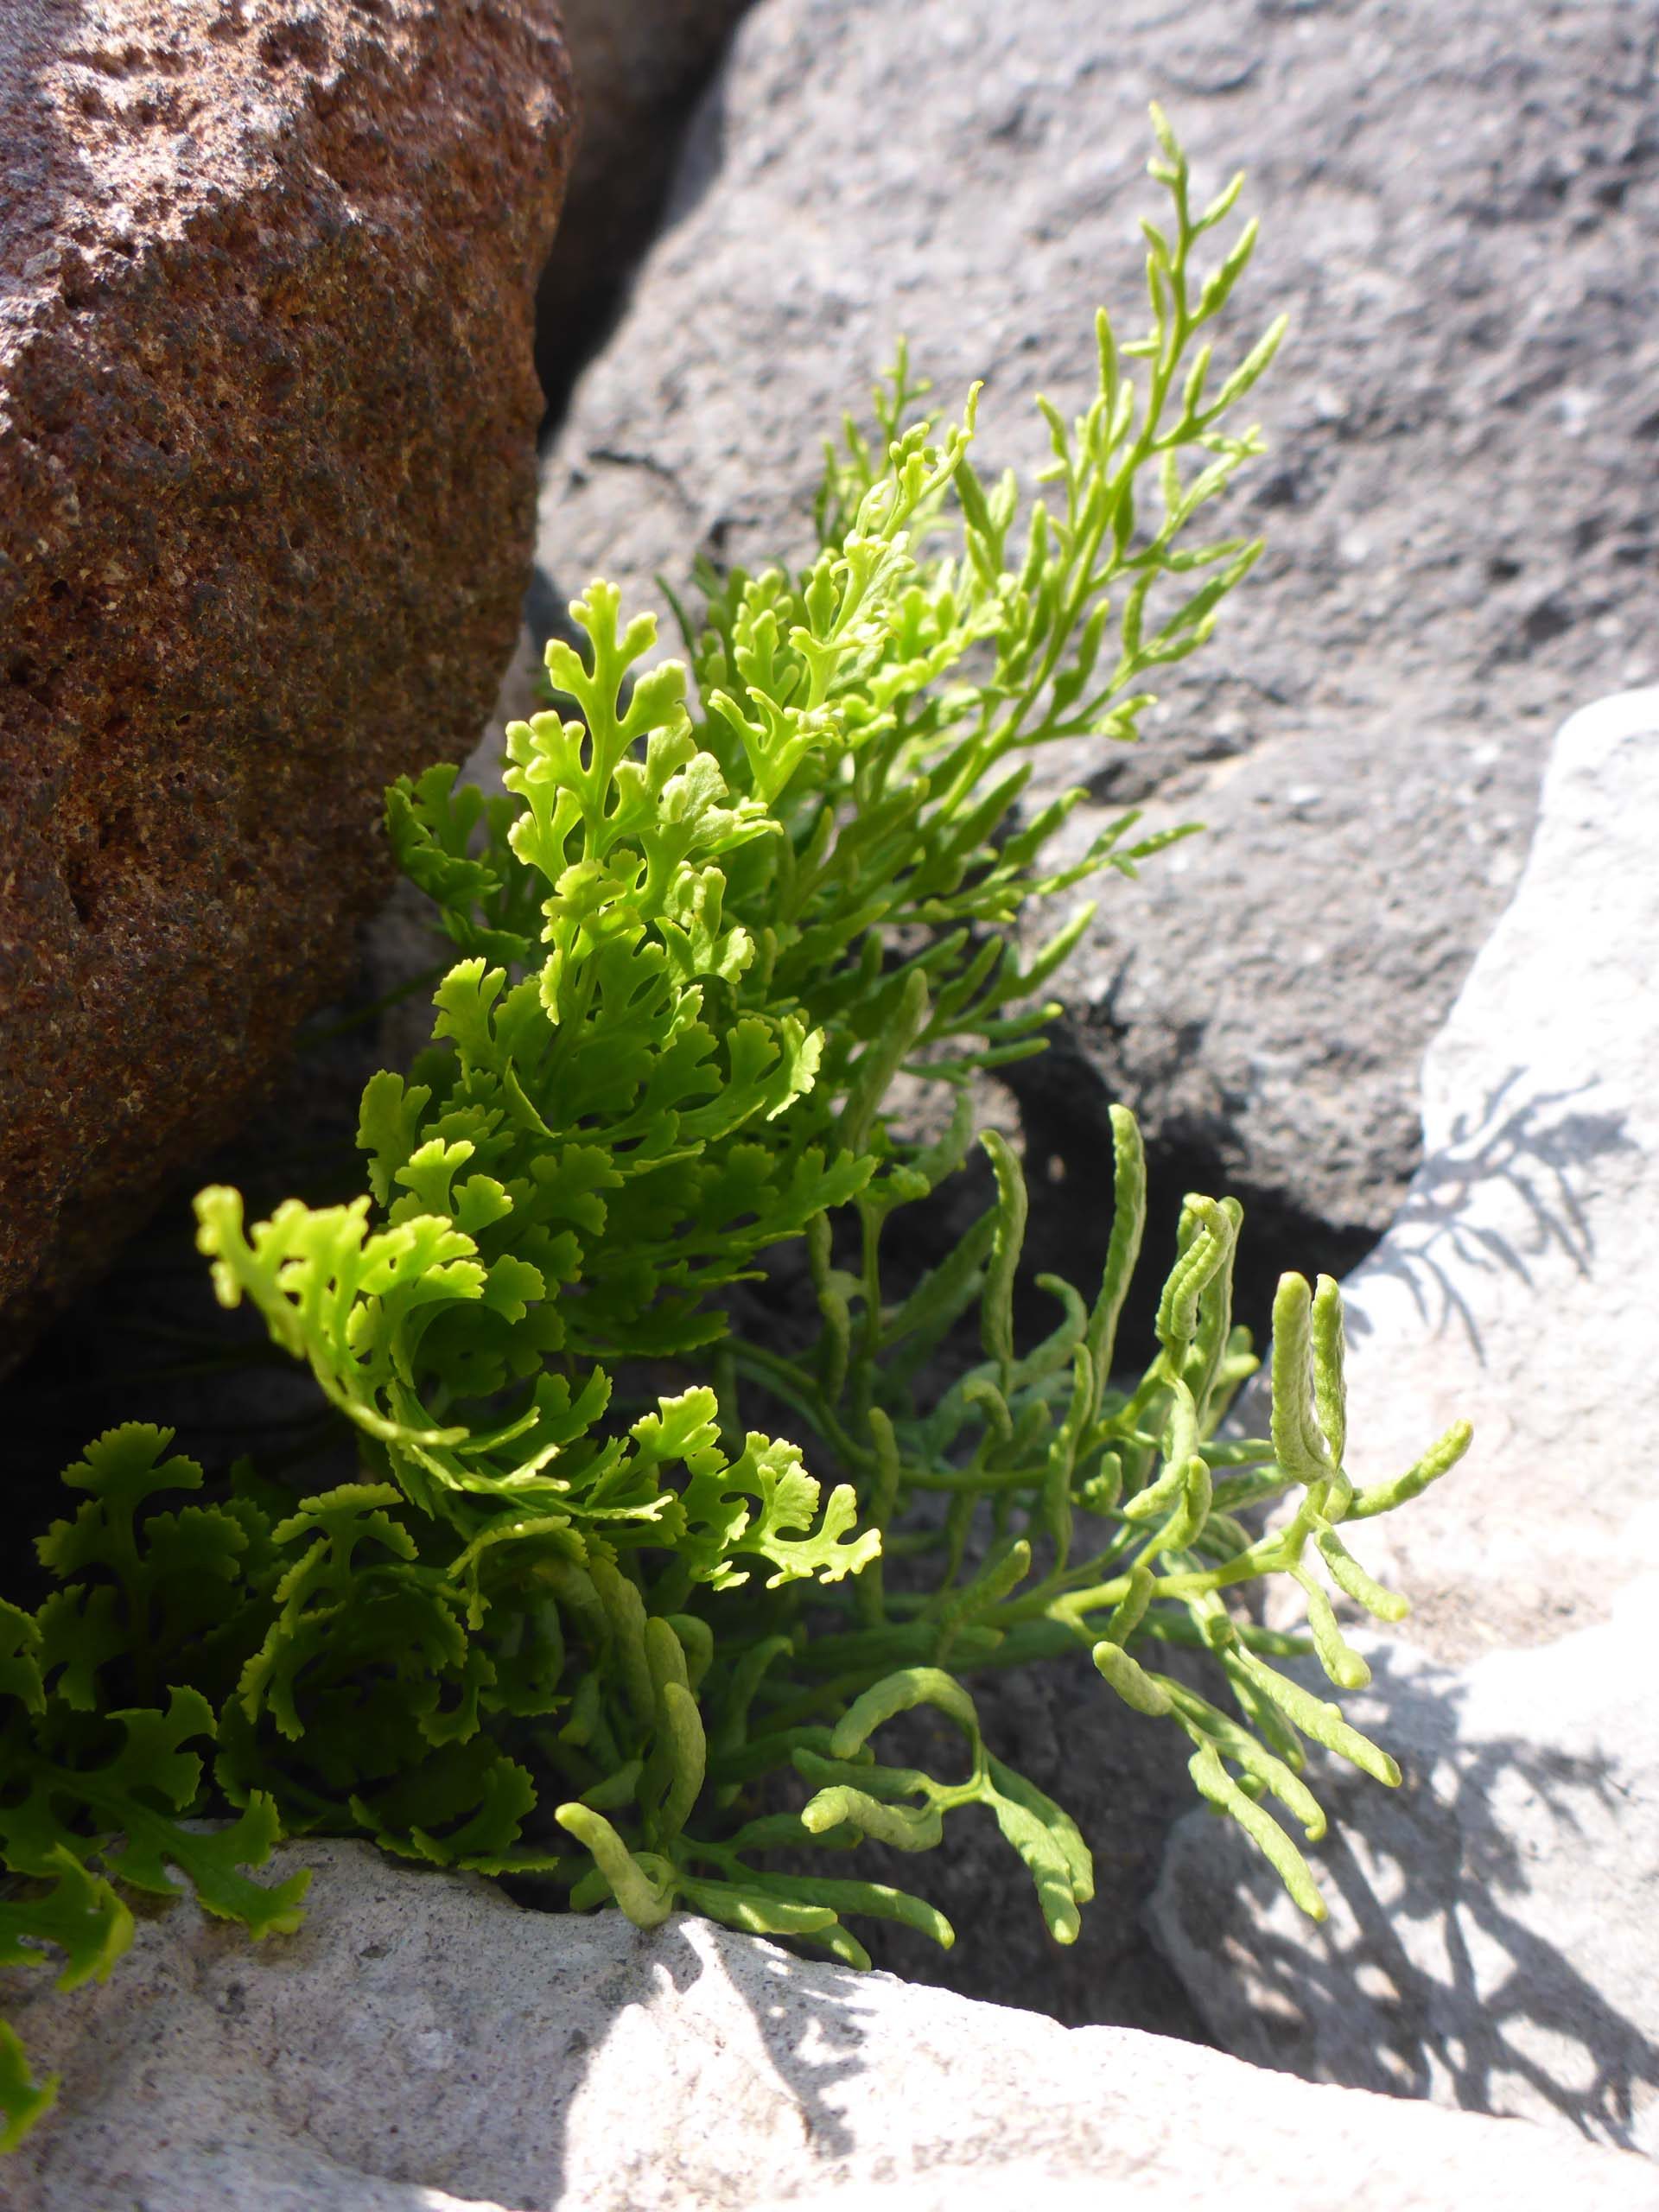 Cascade parsley fern. D. Burk.